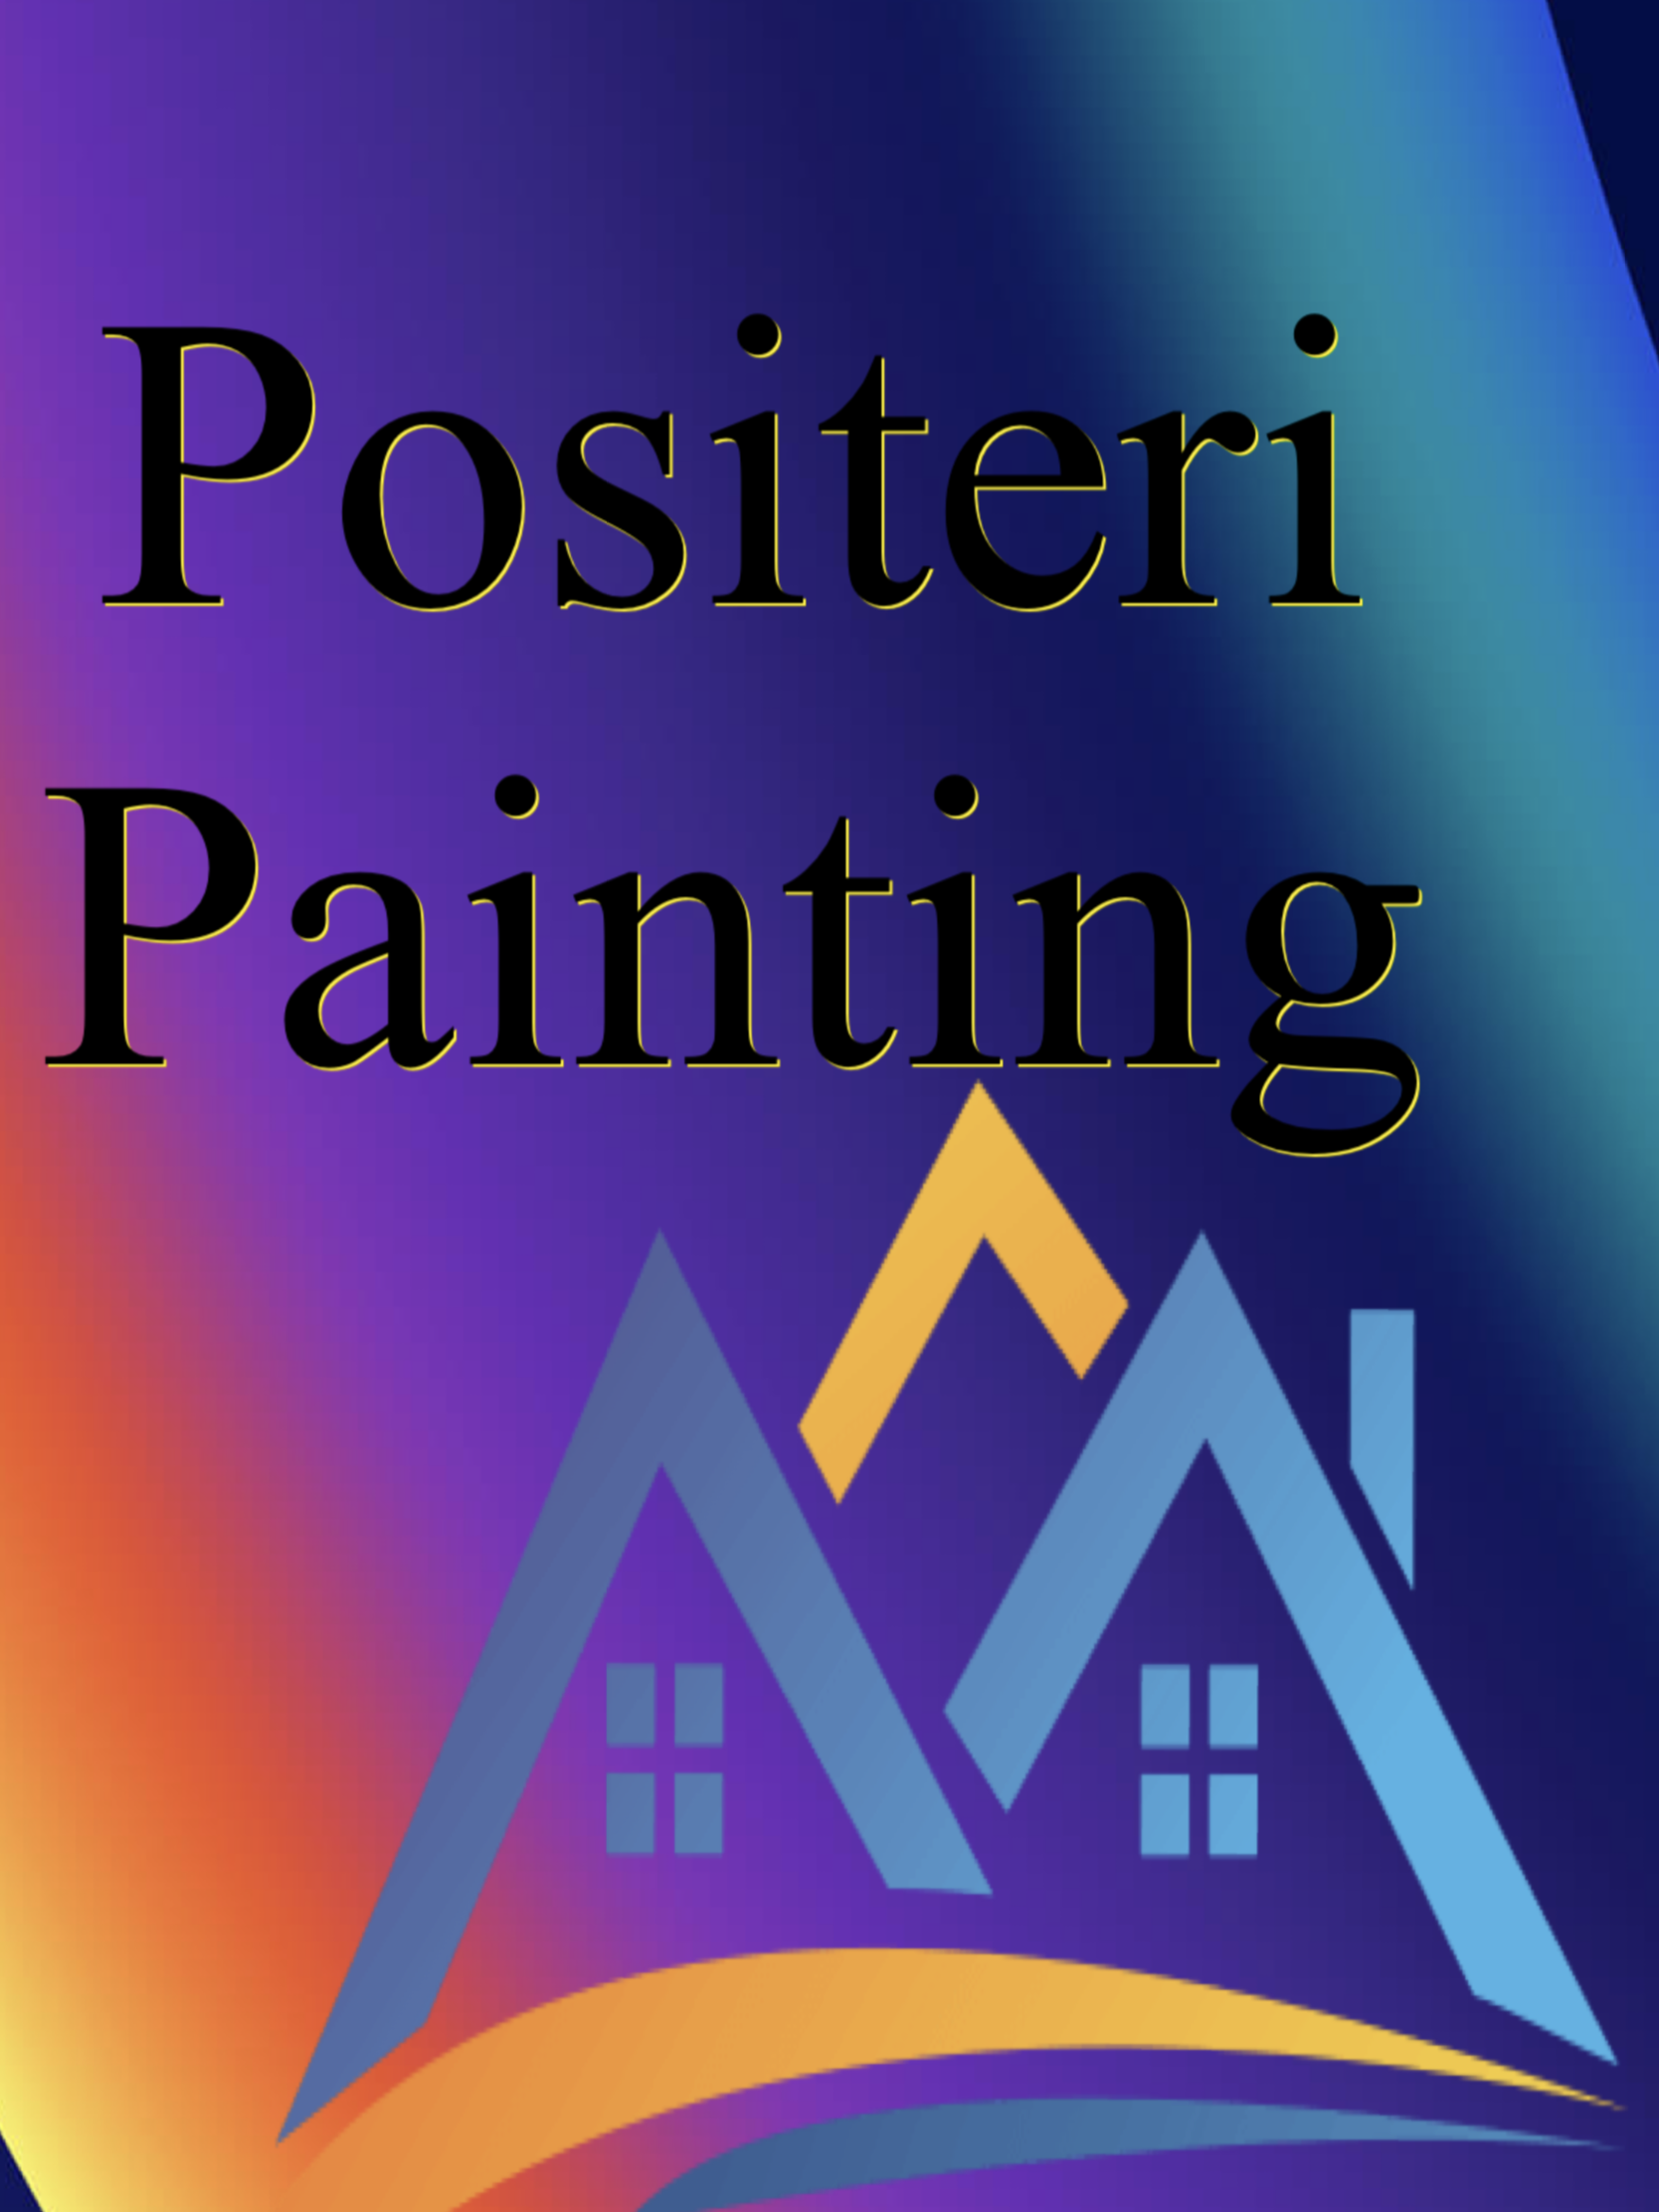 Positeri Painting Logo